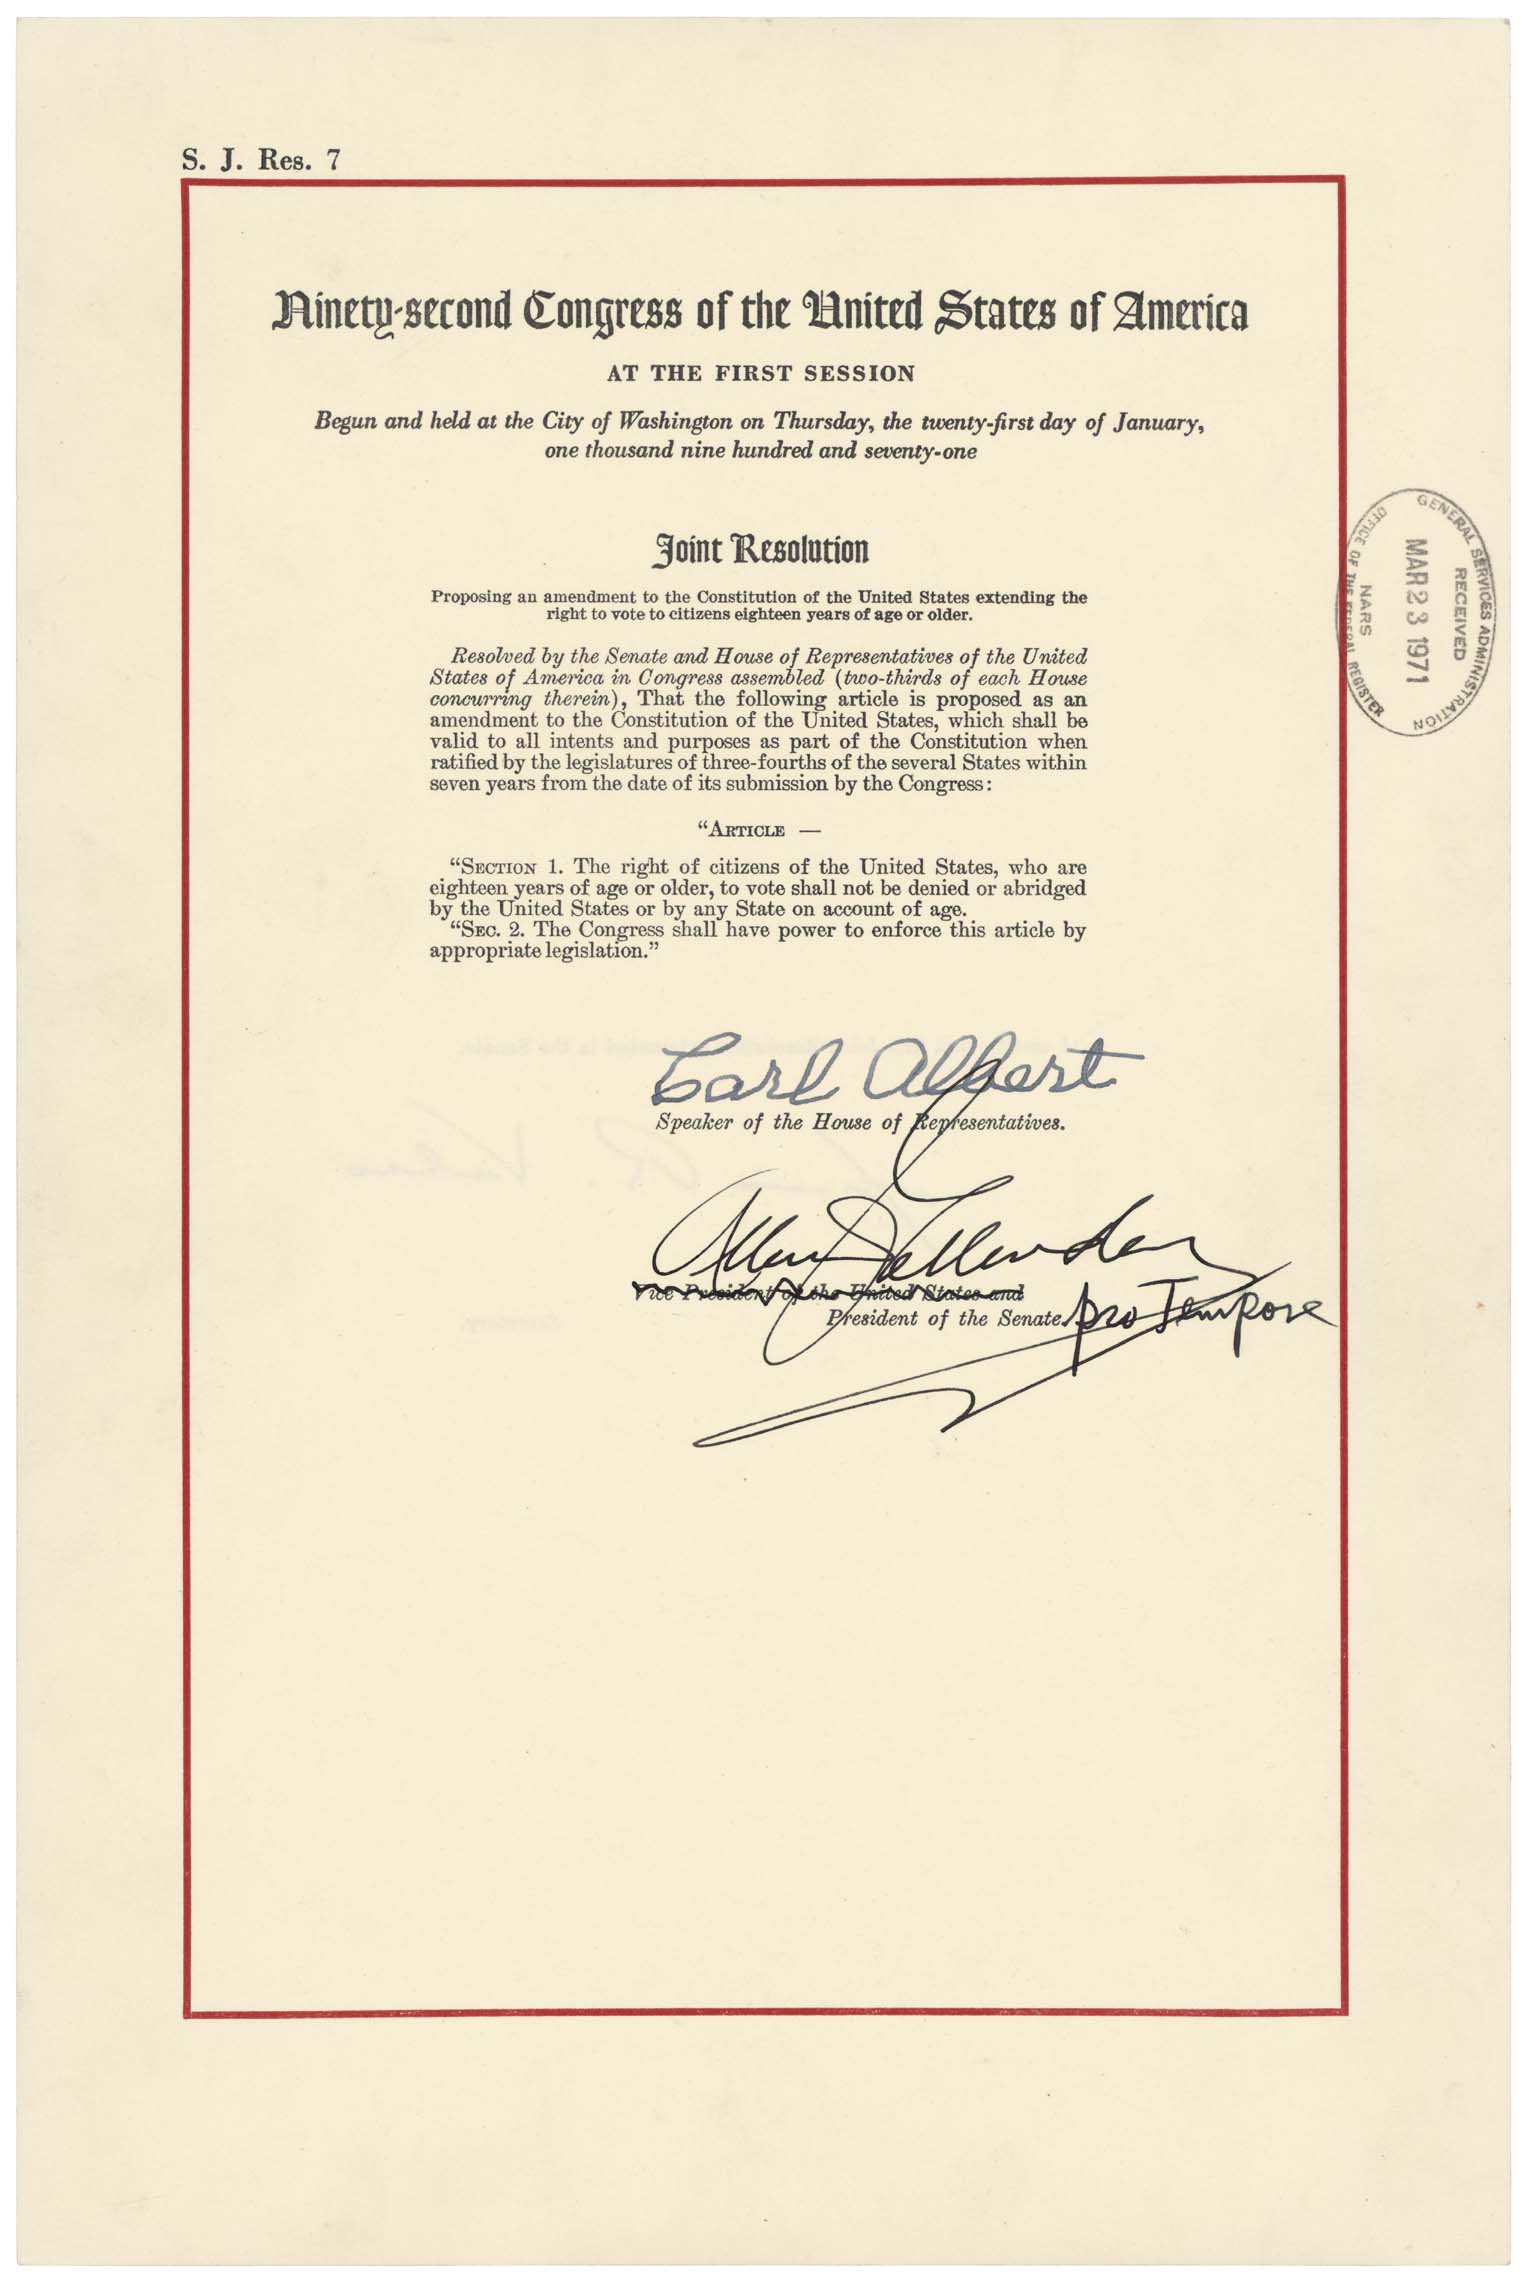 Twenty-sixth Amendment to the U.S. Constitution